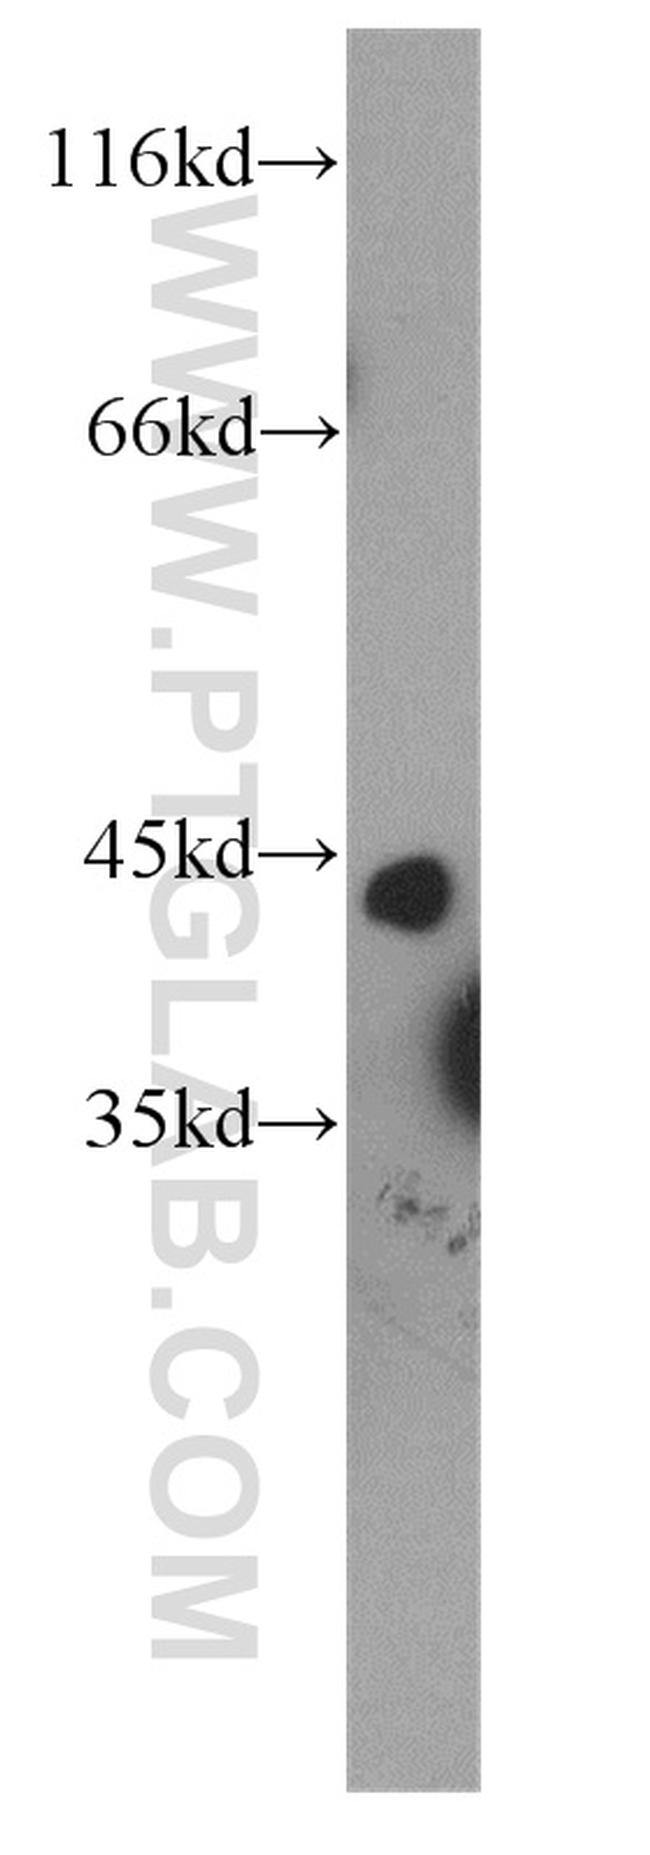 KLF13 Antibody in Western Blot (WB)